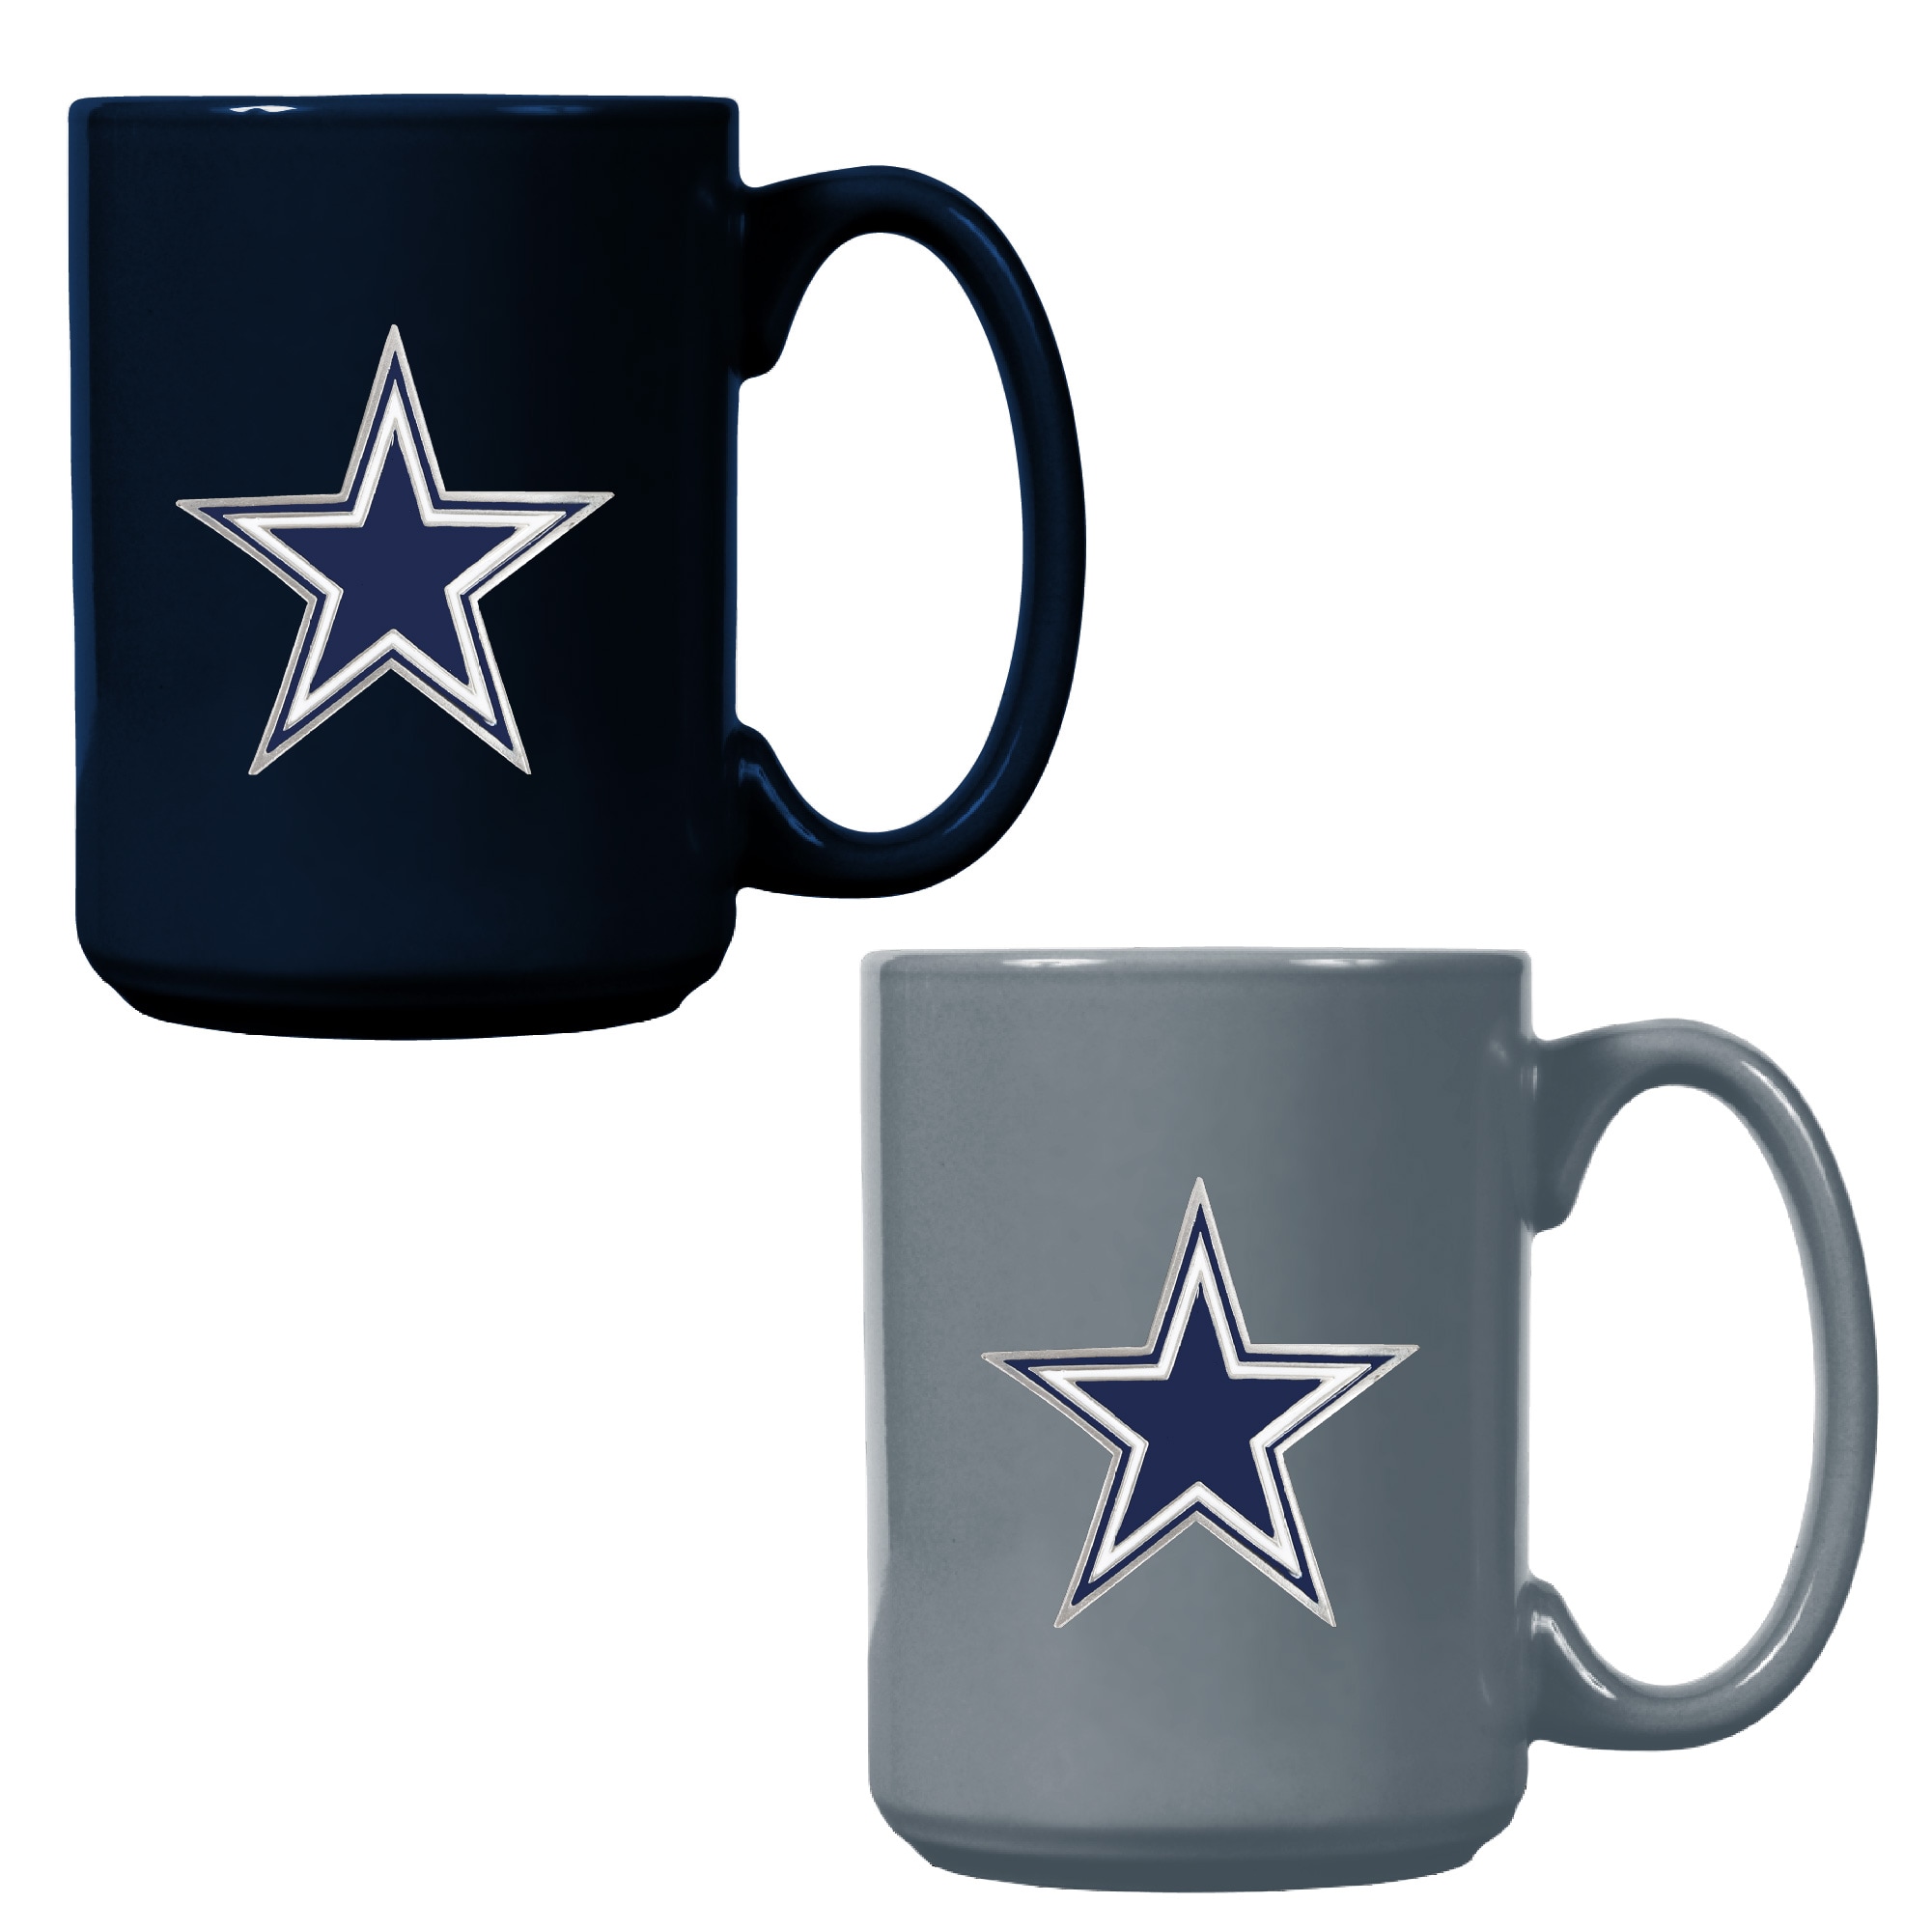 Dallas Cowboys Souvenir Cups, 8 count 